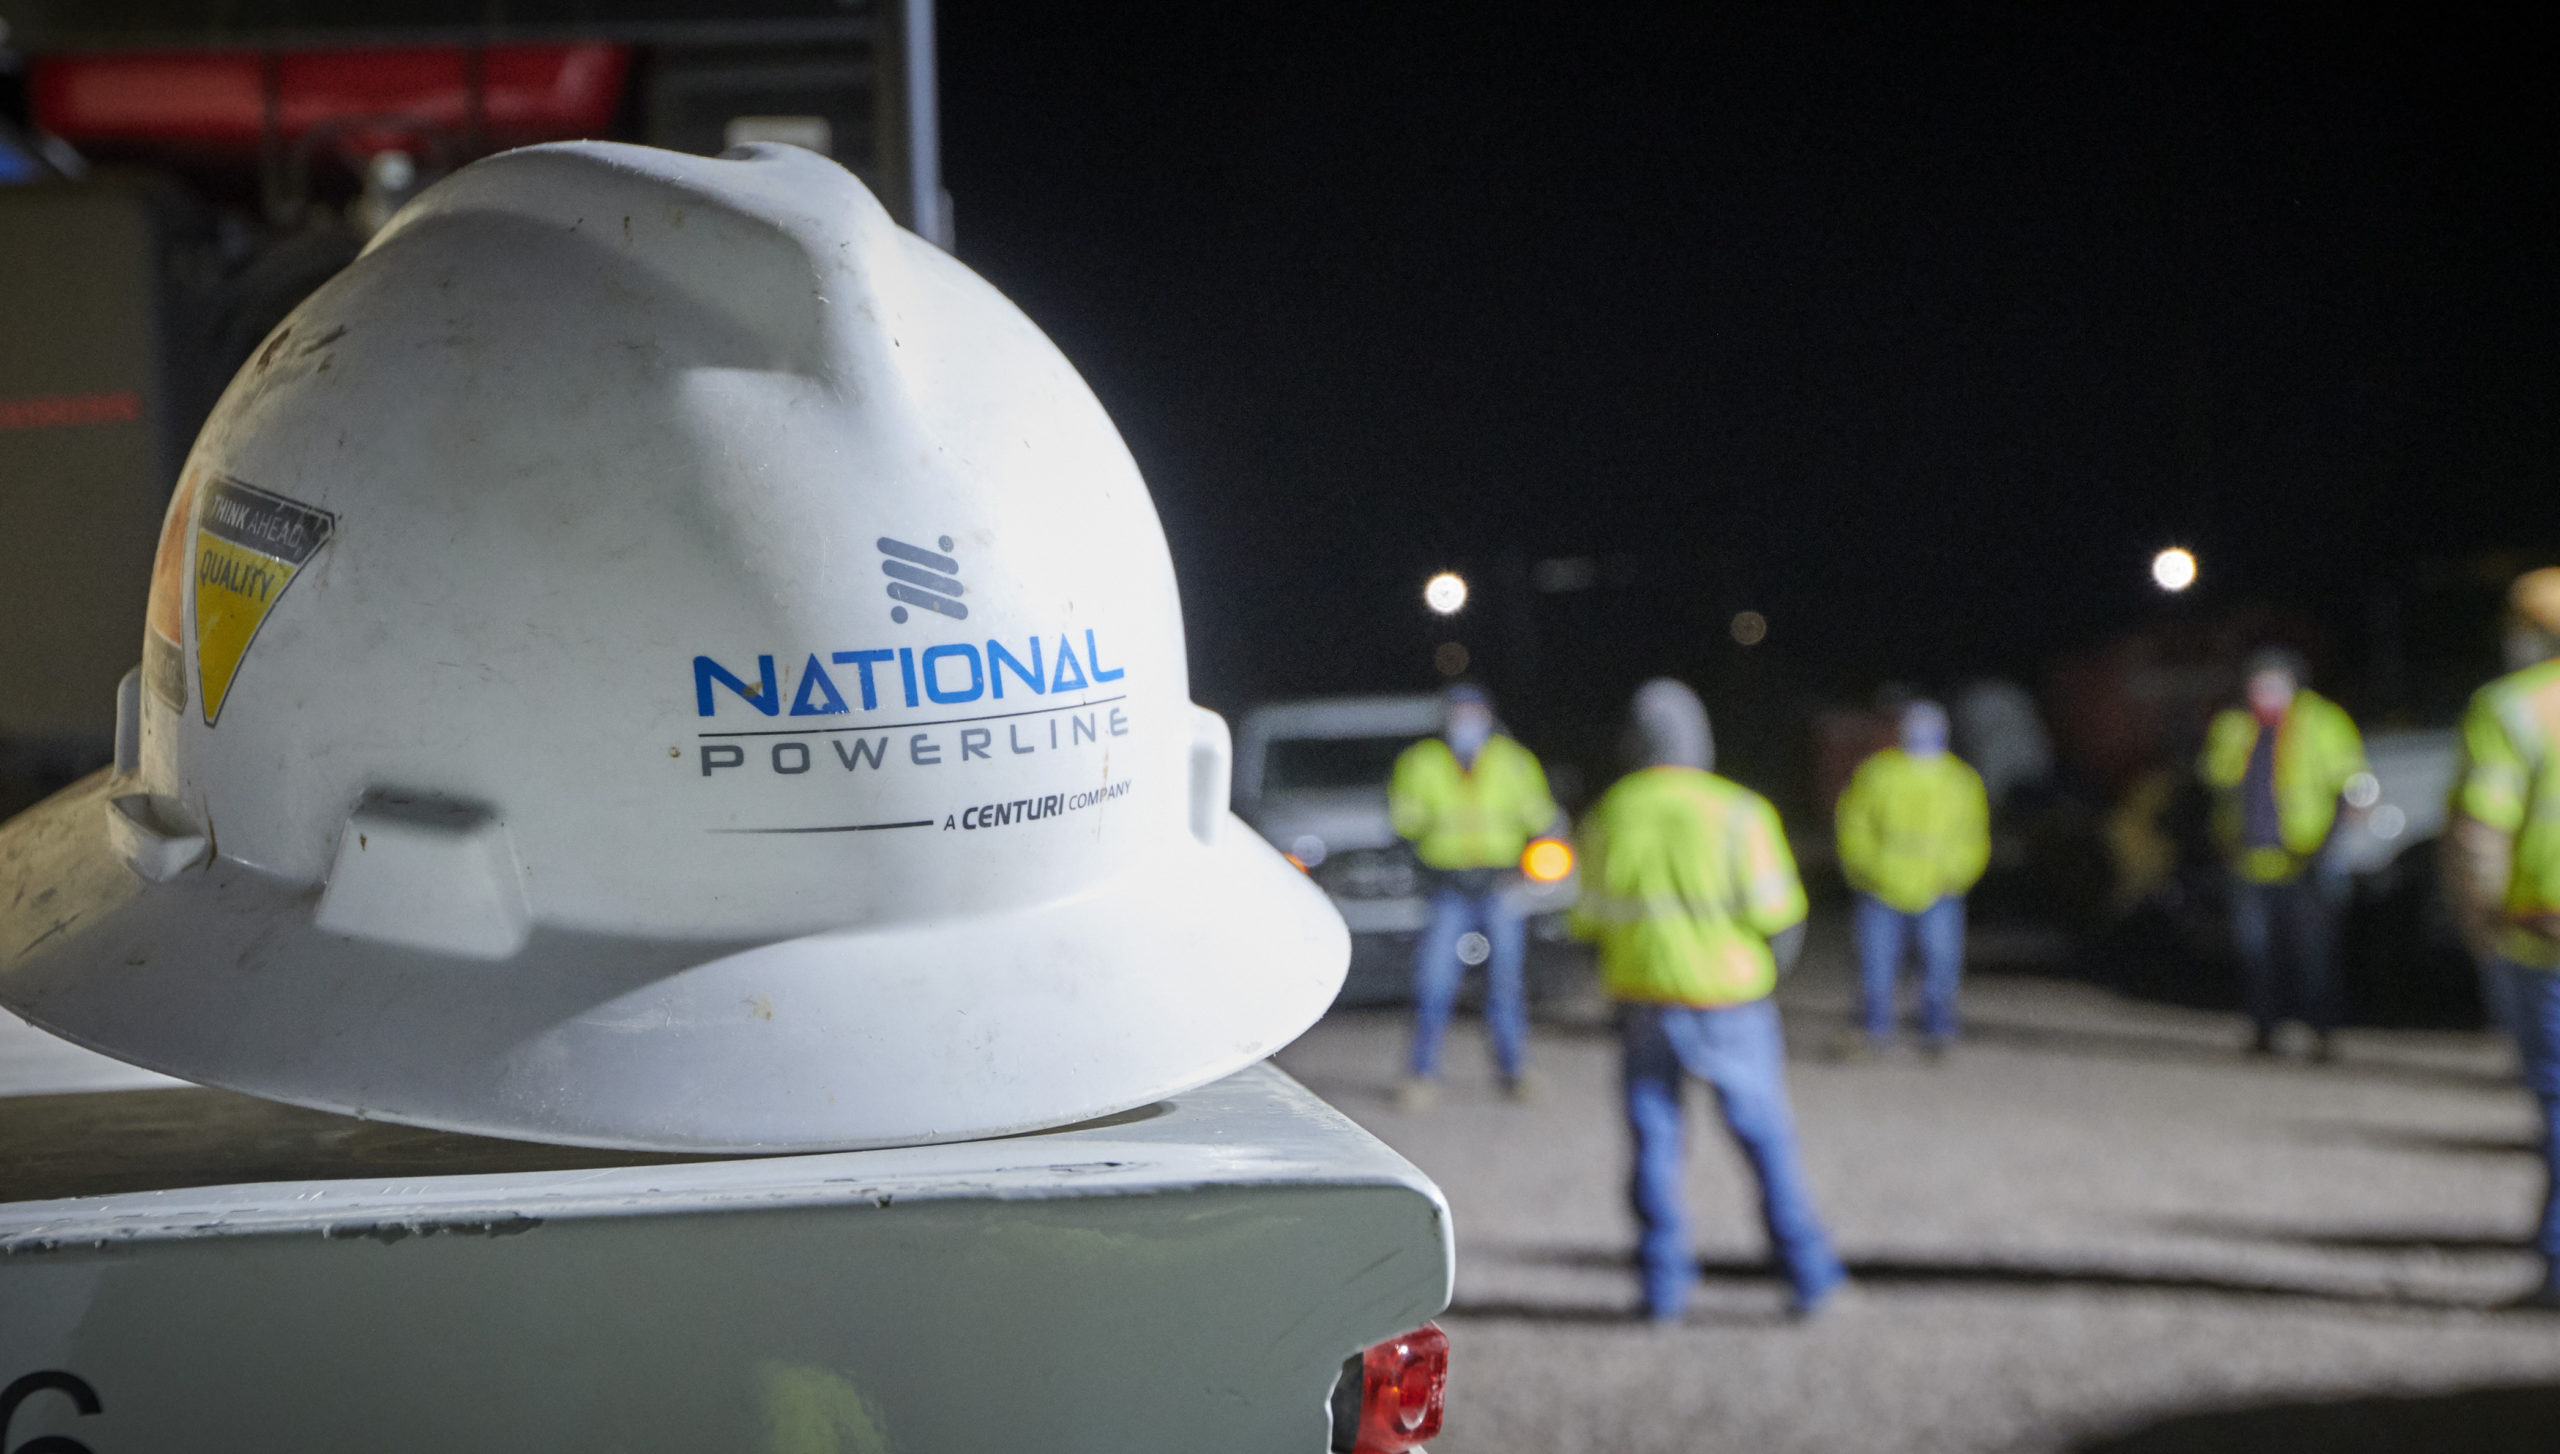 National Powerline logo on a hardhat